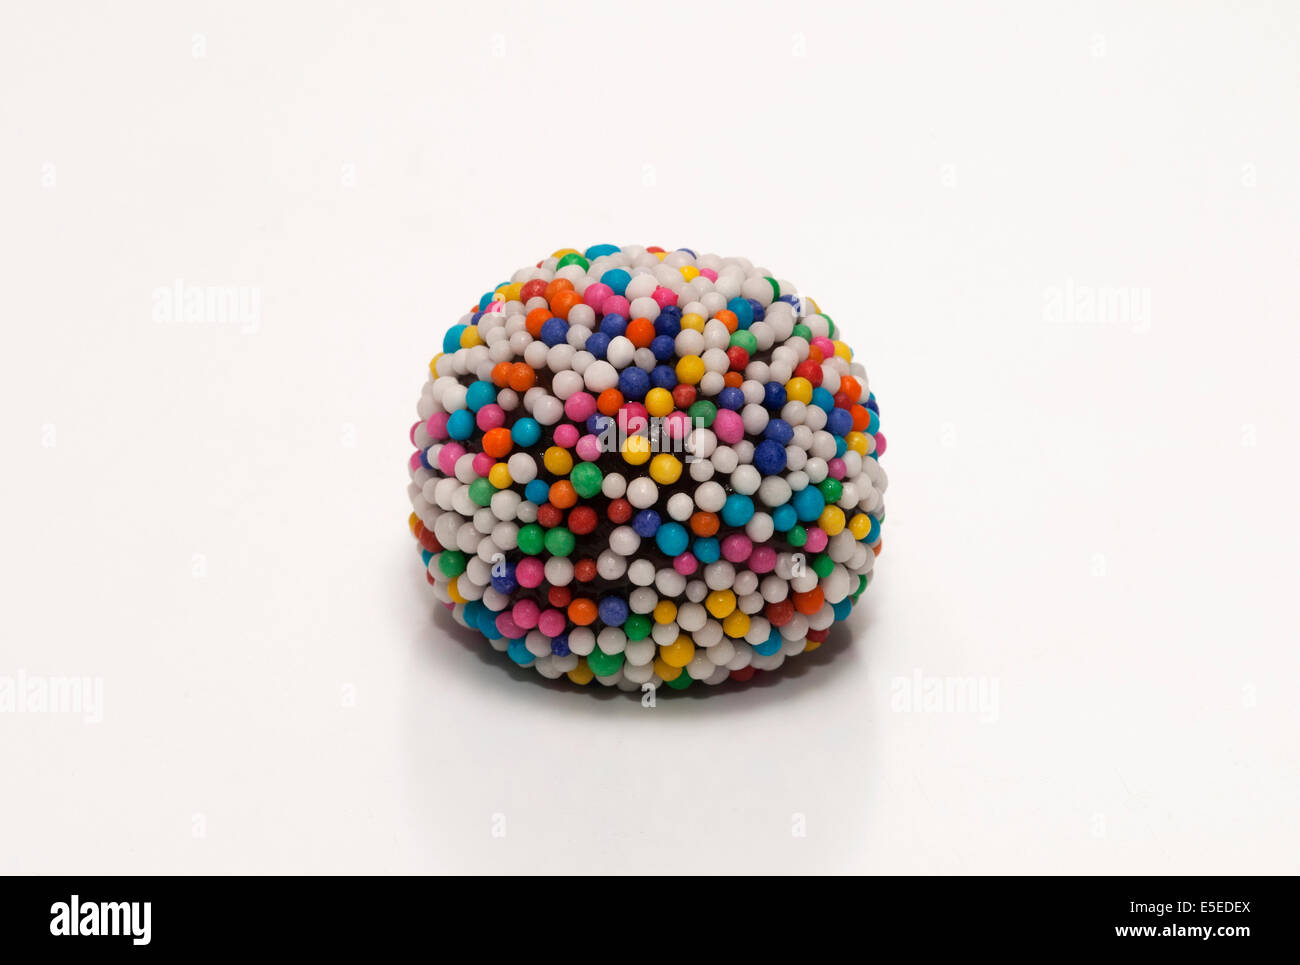 Brazilian Sweet - Brigadeiro / Brigadeiro with colorful beads Stock Photo